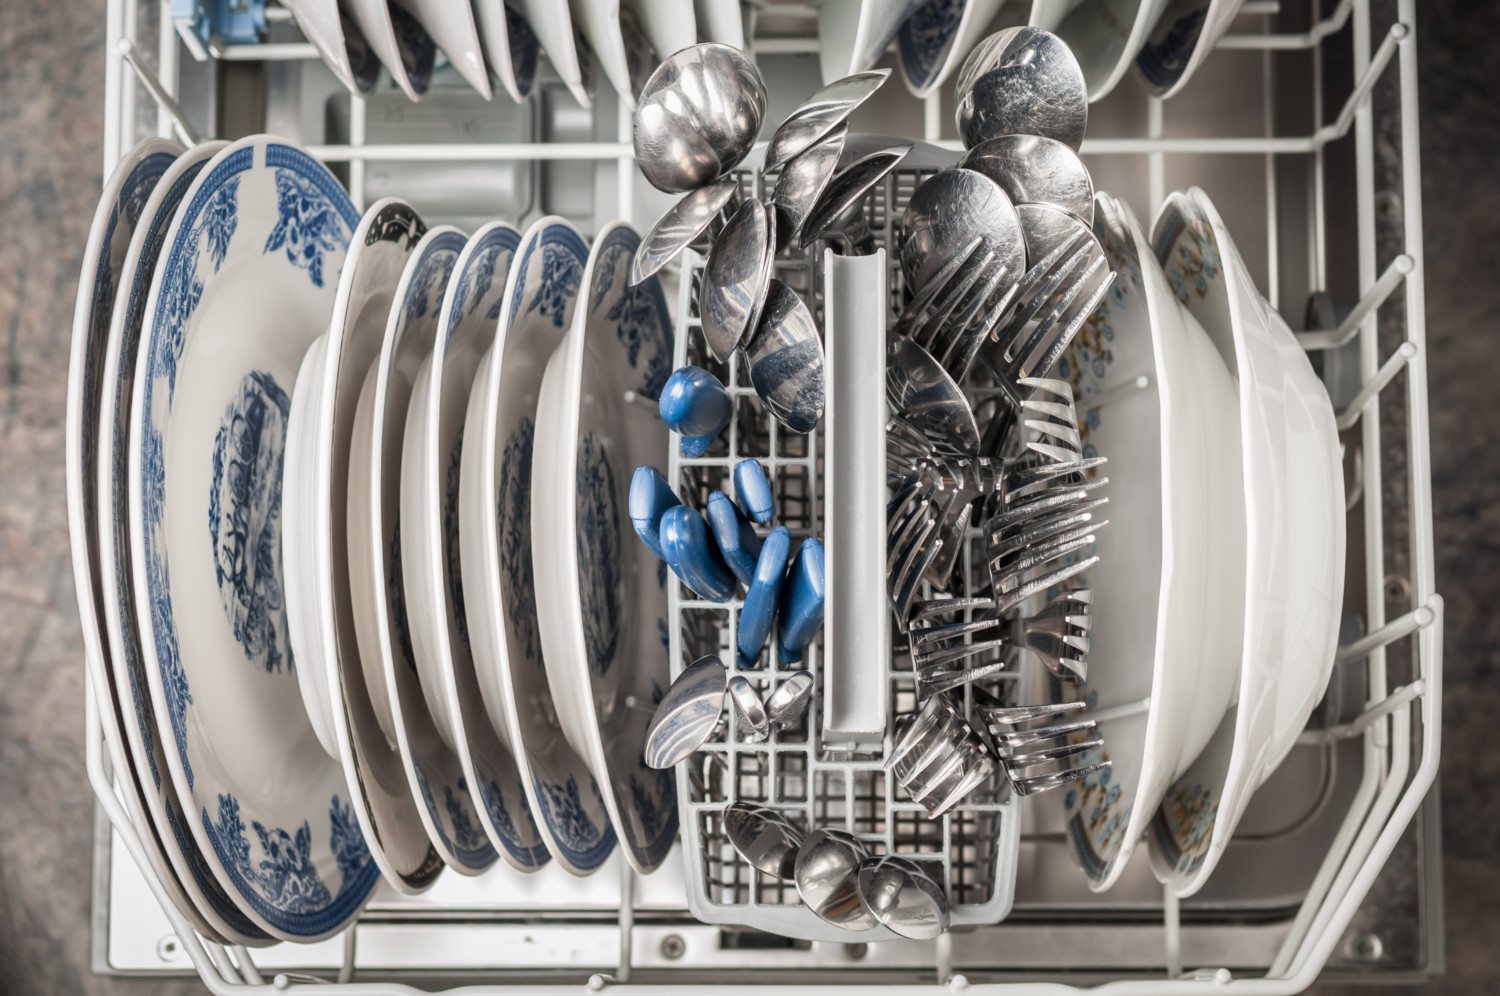 Dishes in dishwasher basket